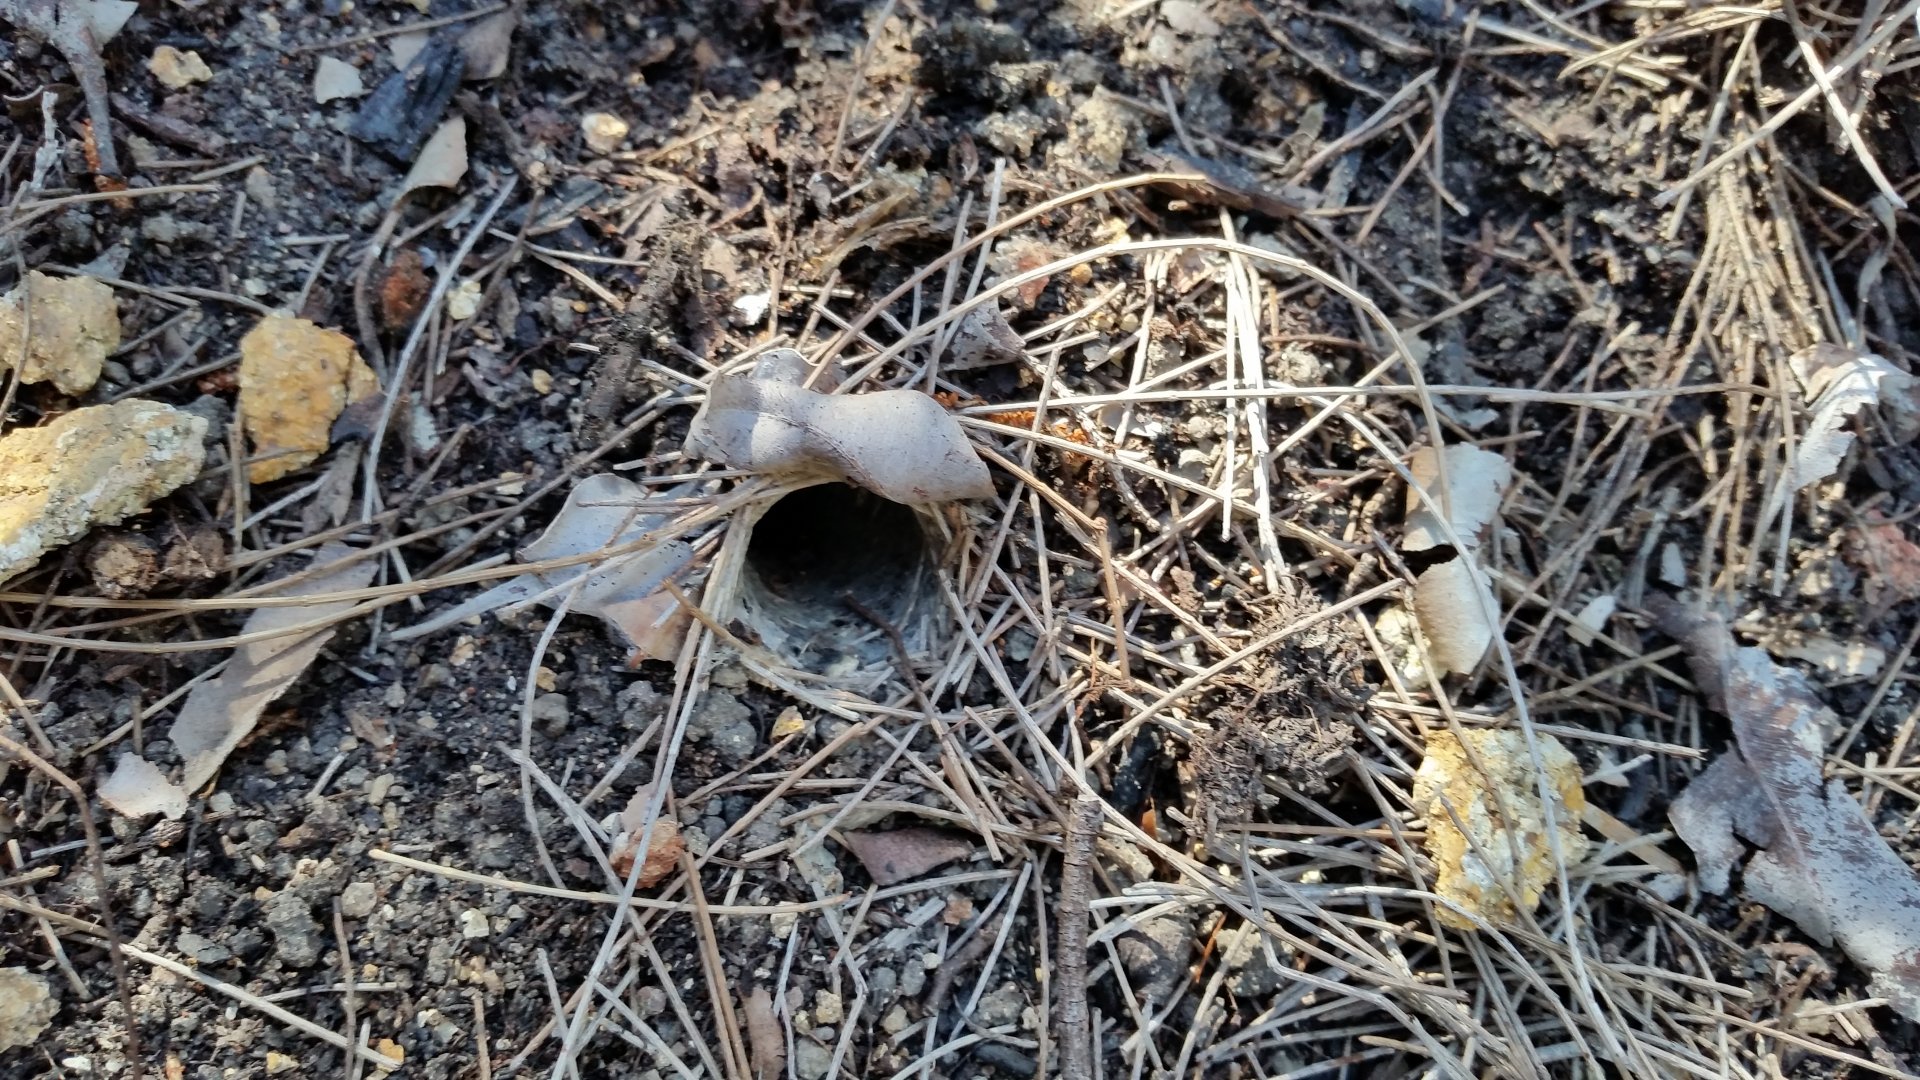 Wild trapdoor burrow (Arbanitis)